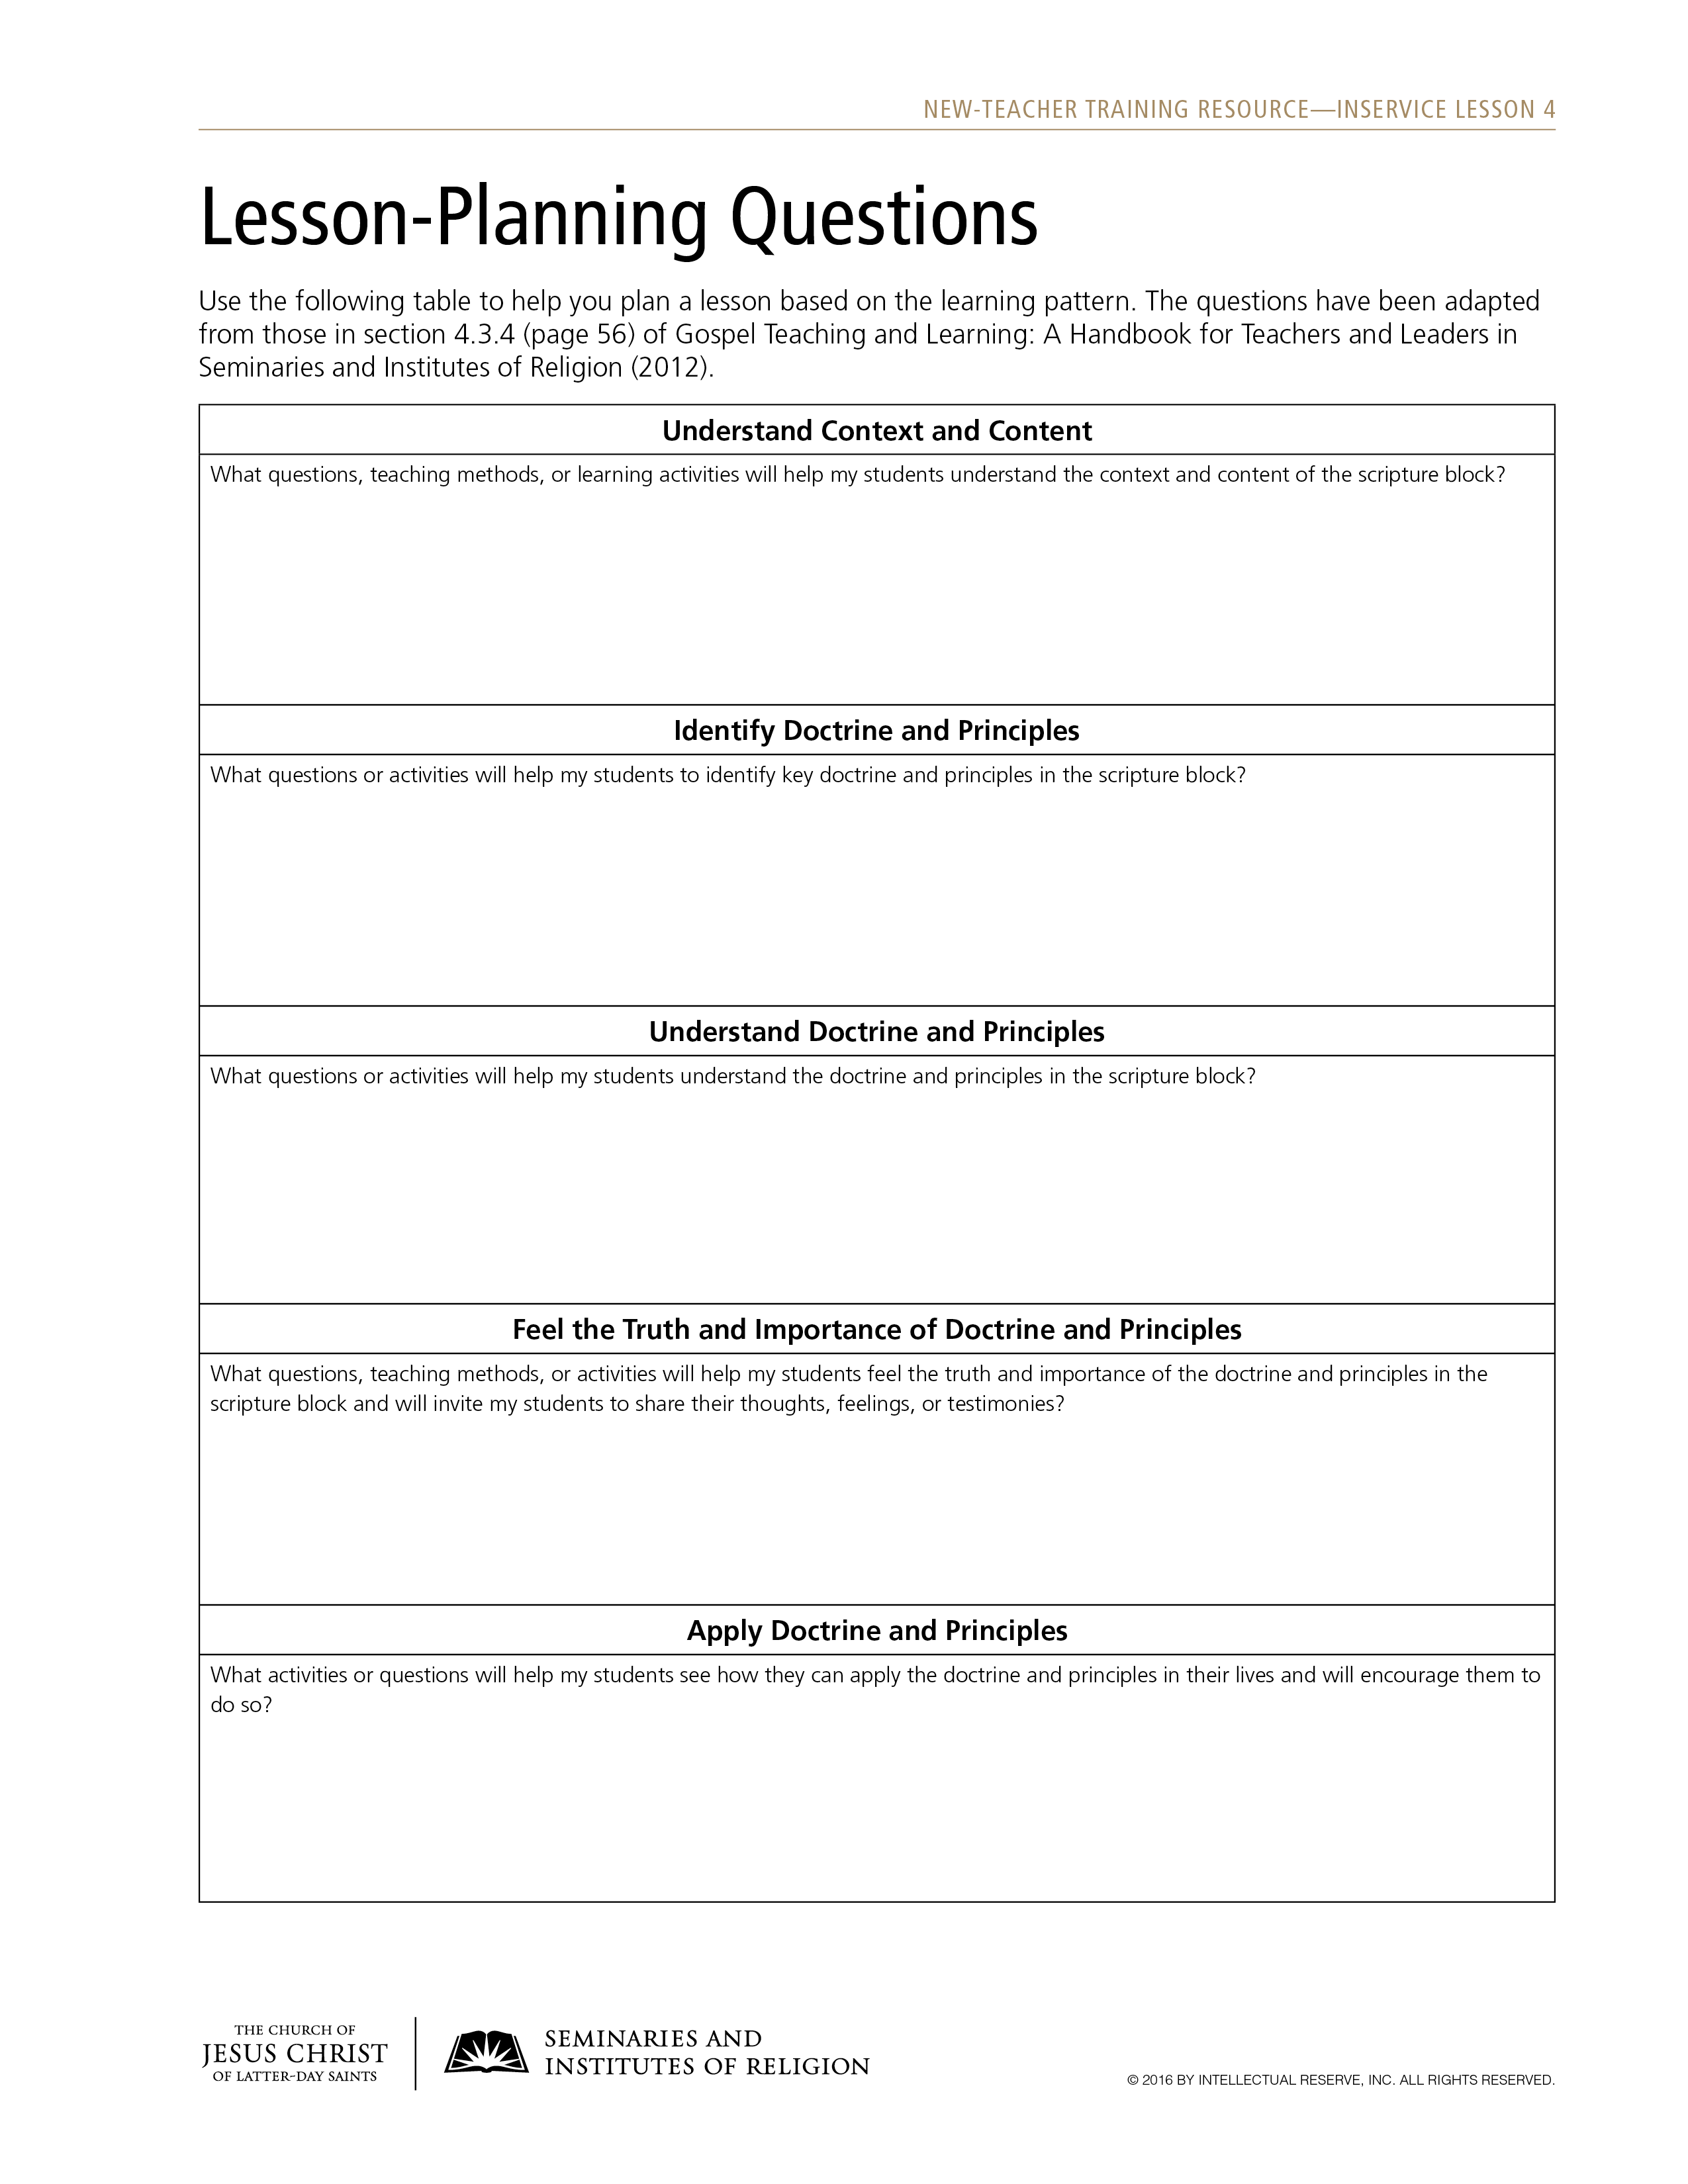 handout, Lesson-Planning Questions